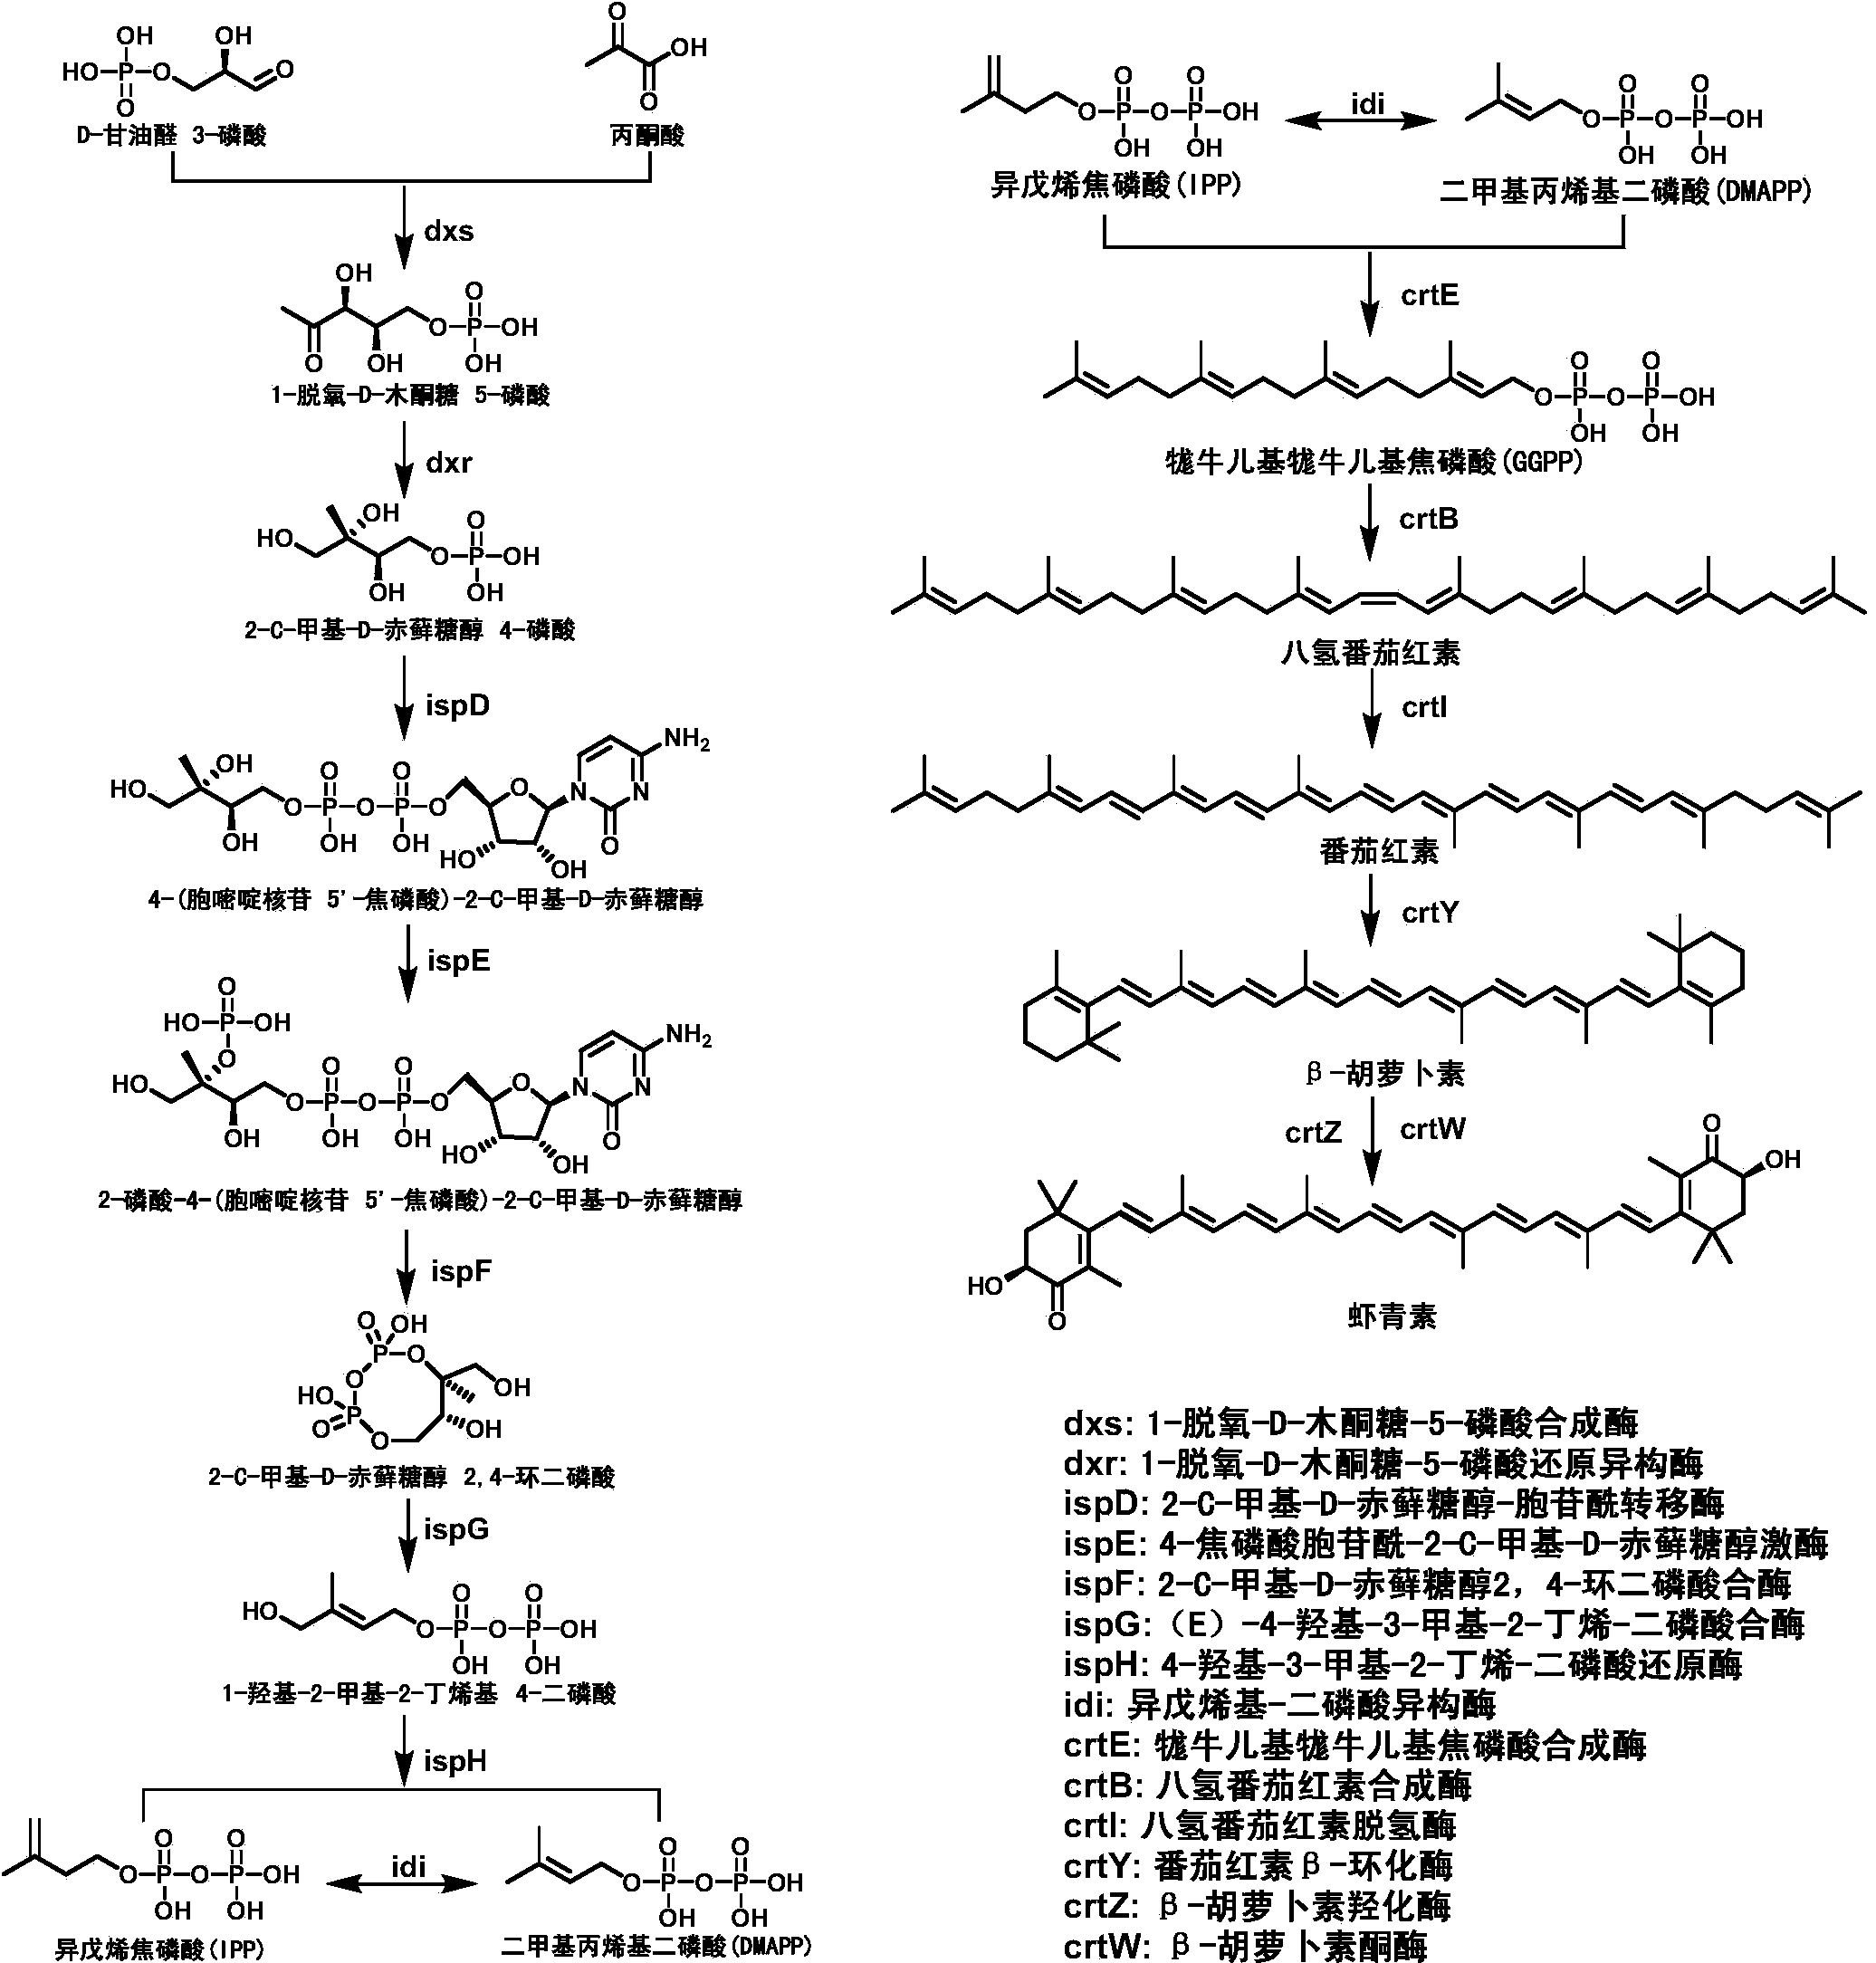 Astaxanthin synthetase of sphingomonas, encoding gene of astaxanthin synthetase and method for genetic manipulation of sphingomonas